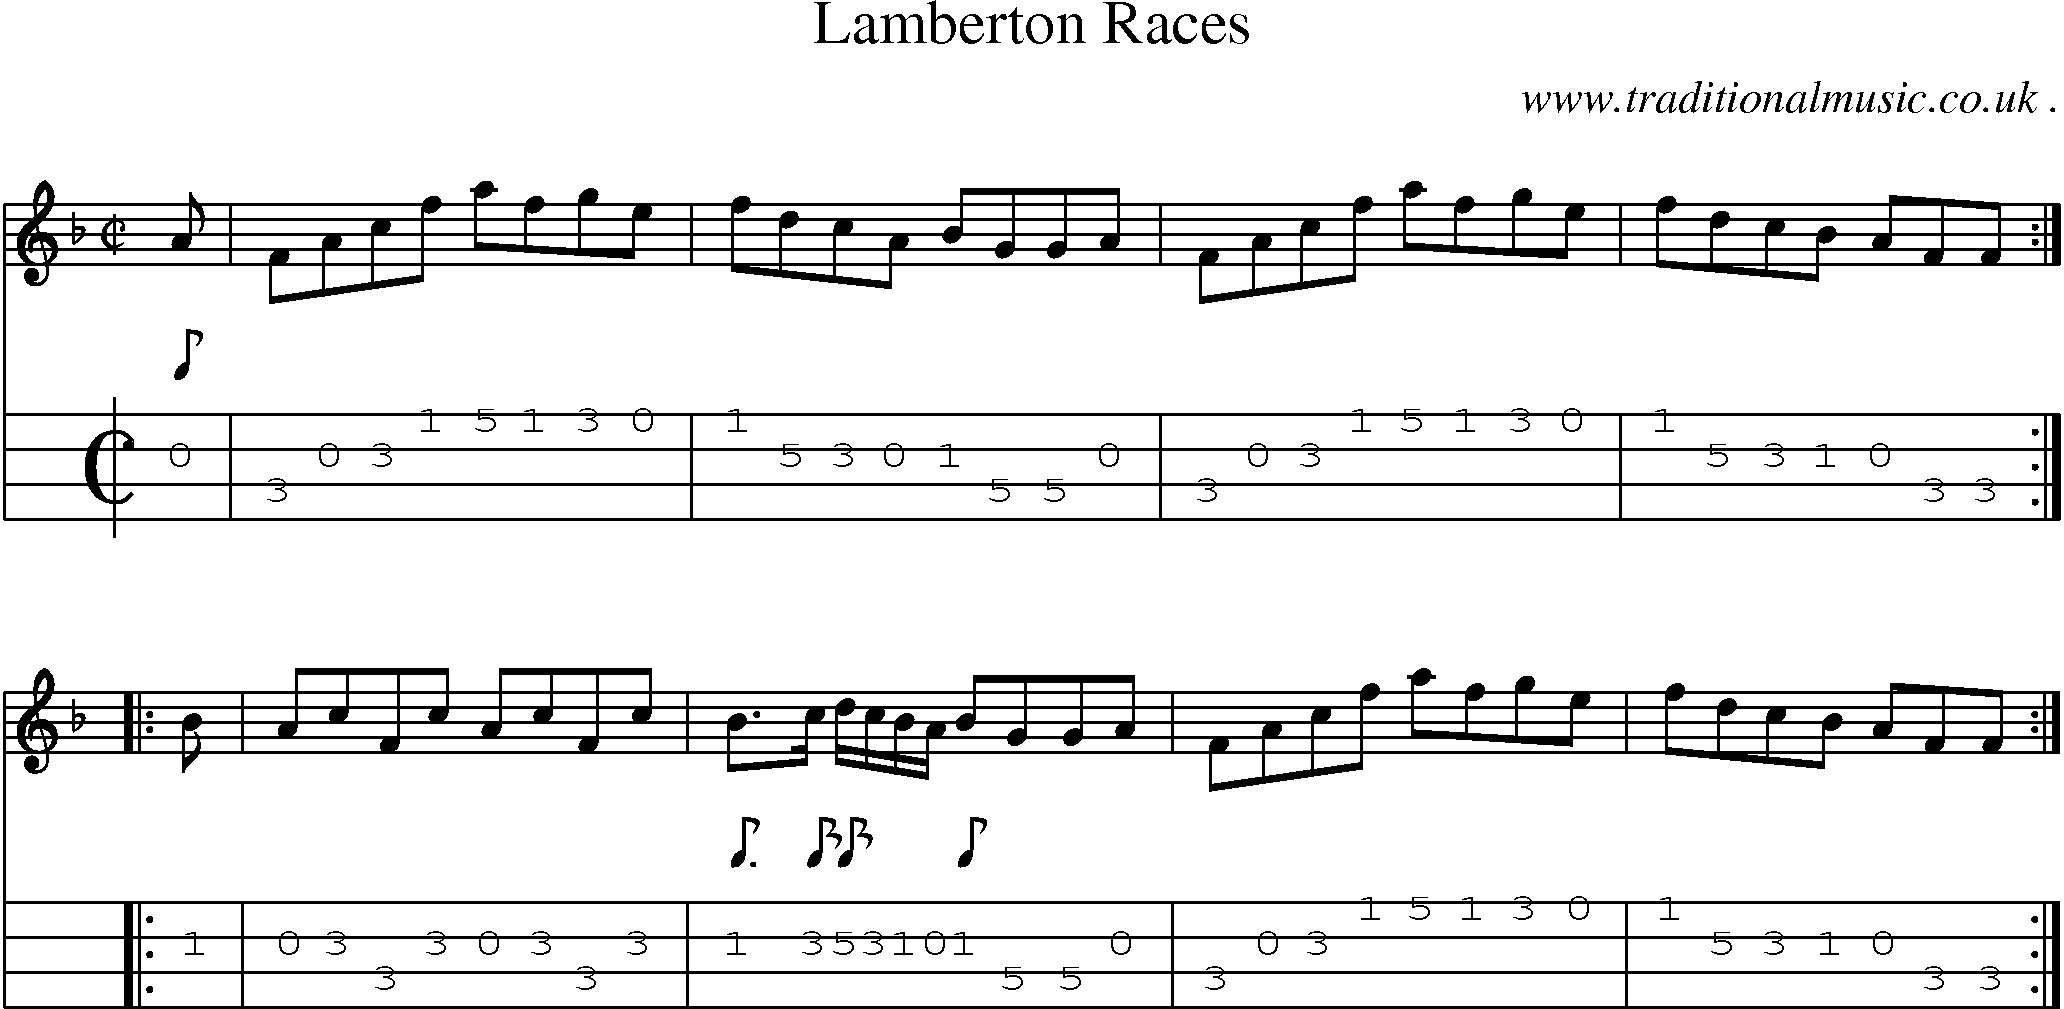 Sheet-music  score, Chords and Mandolin Tabs for Lamberton Races